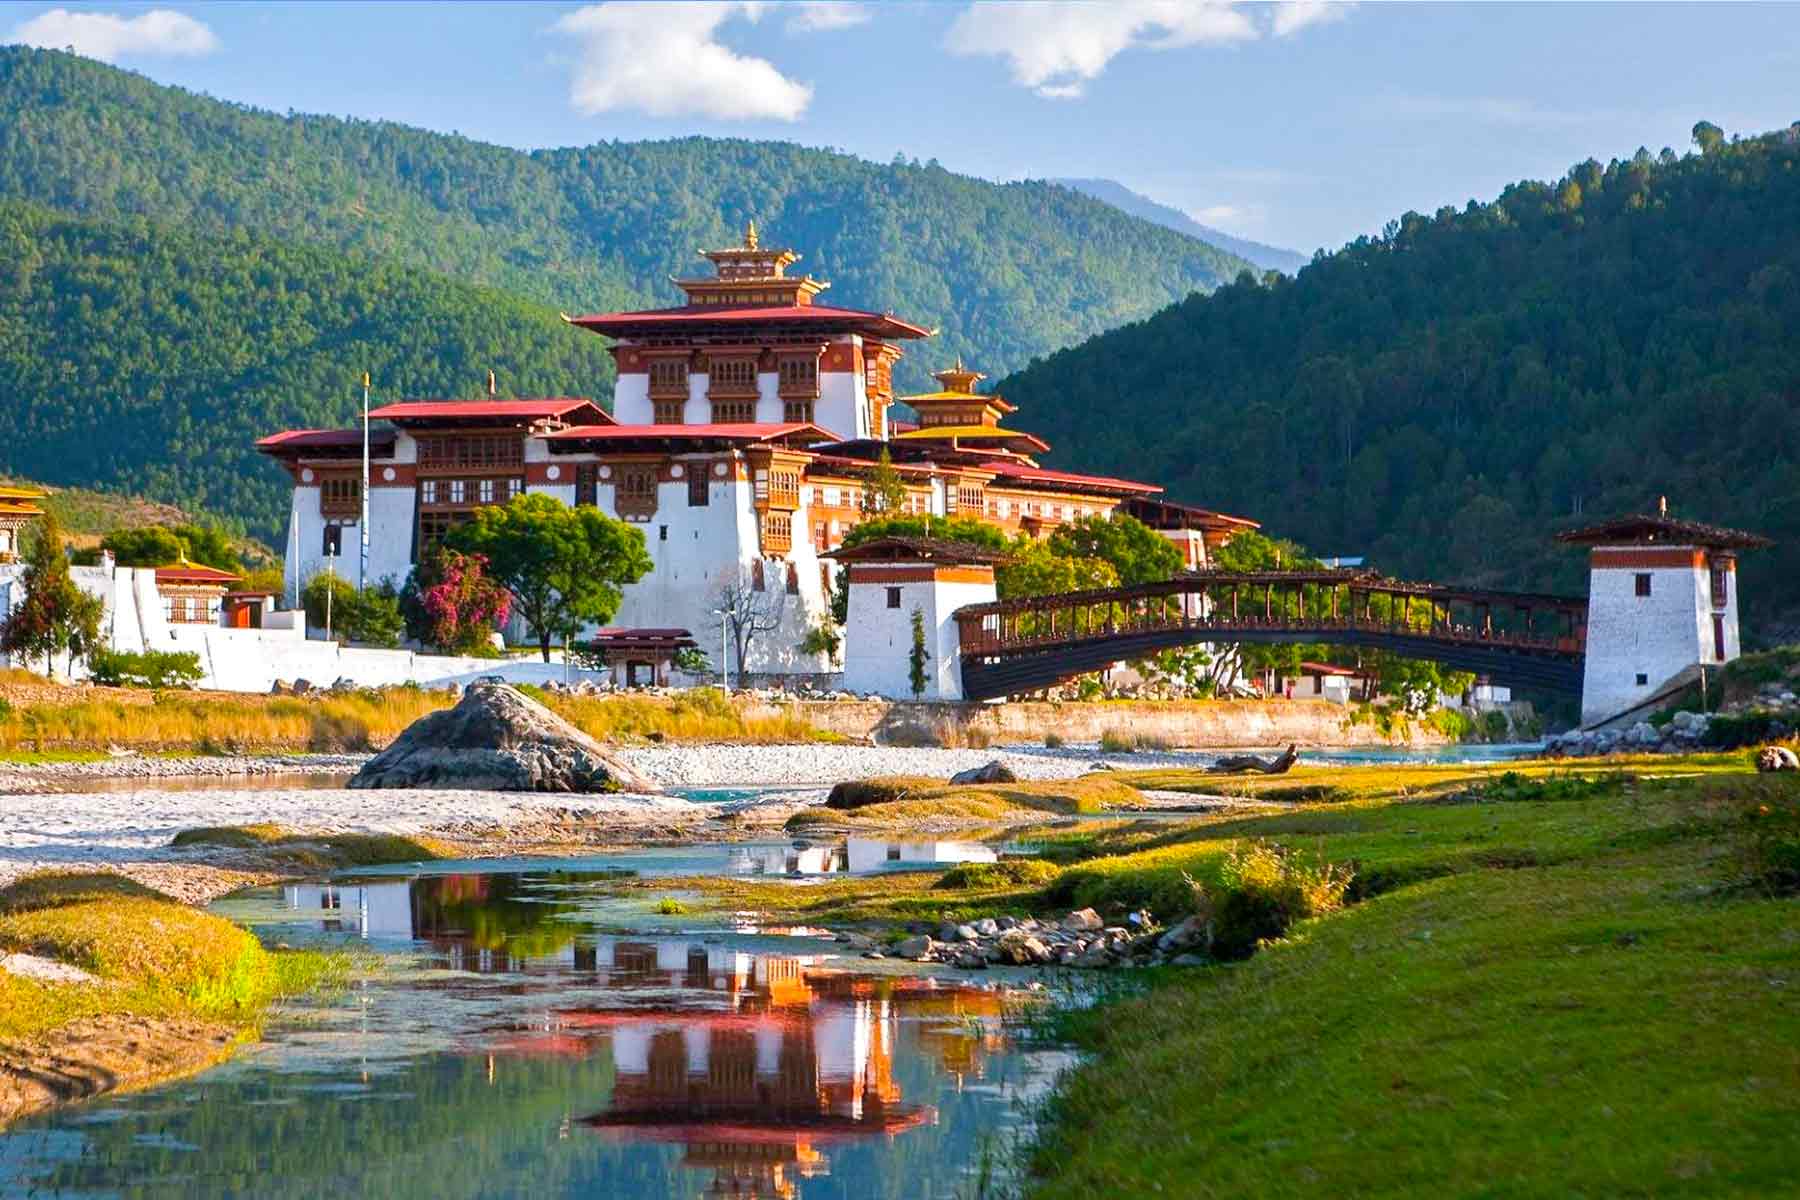 bhutan nepal tibet travel